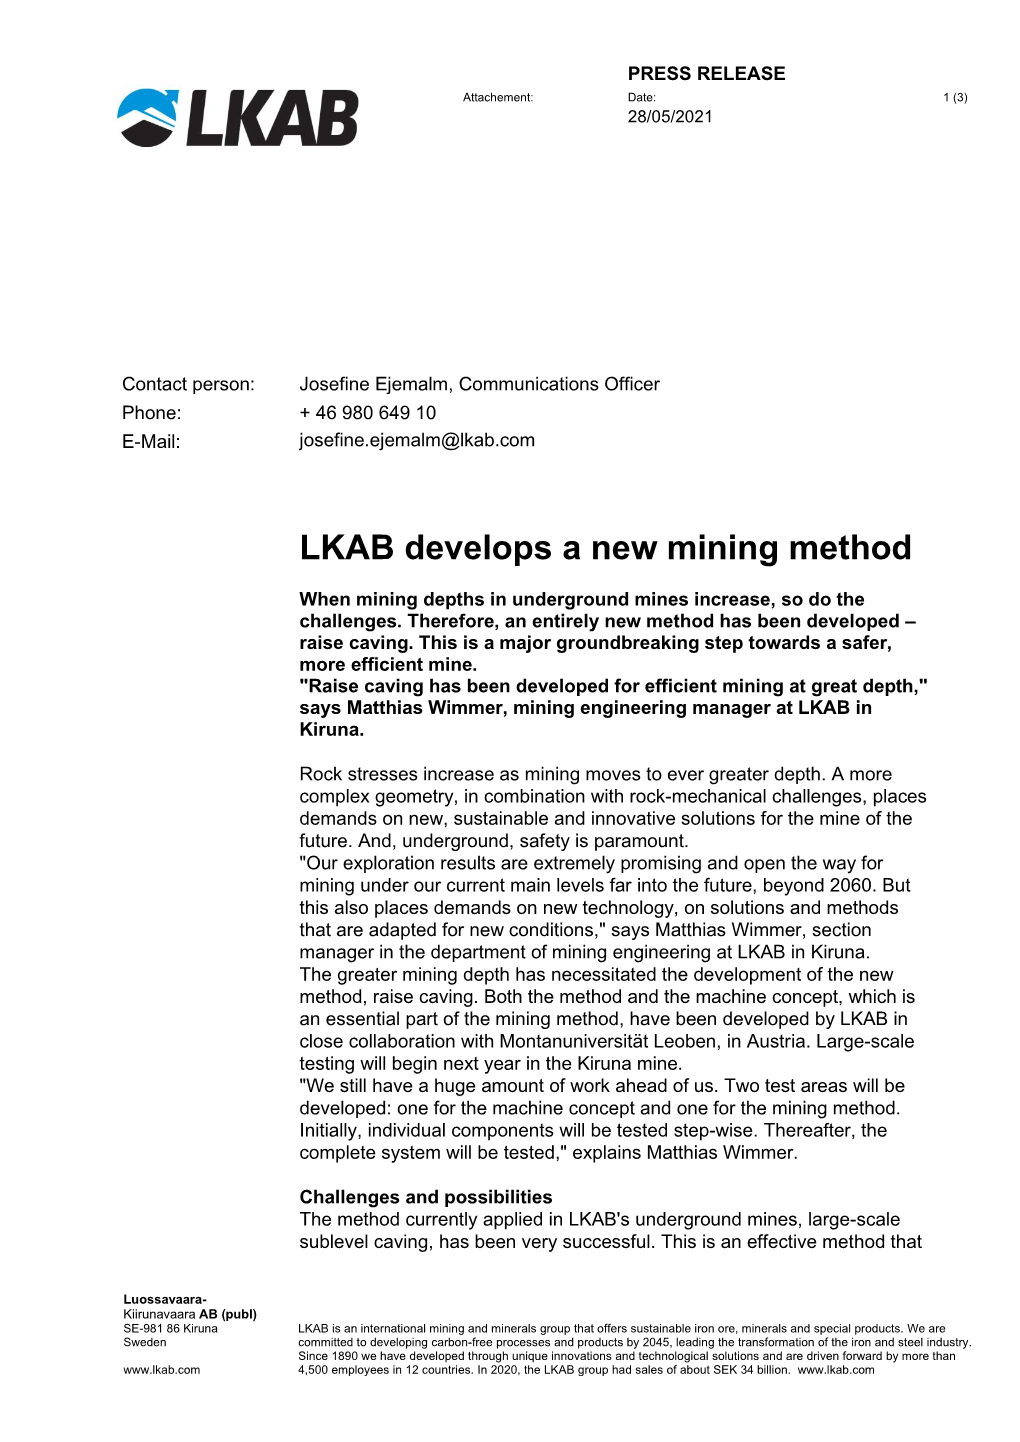 LKAB Develops a New Mining Method